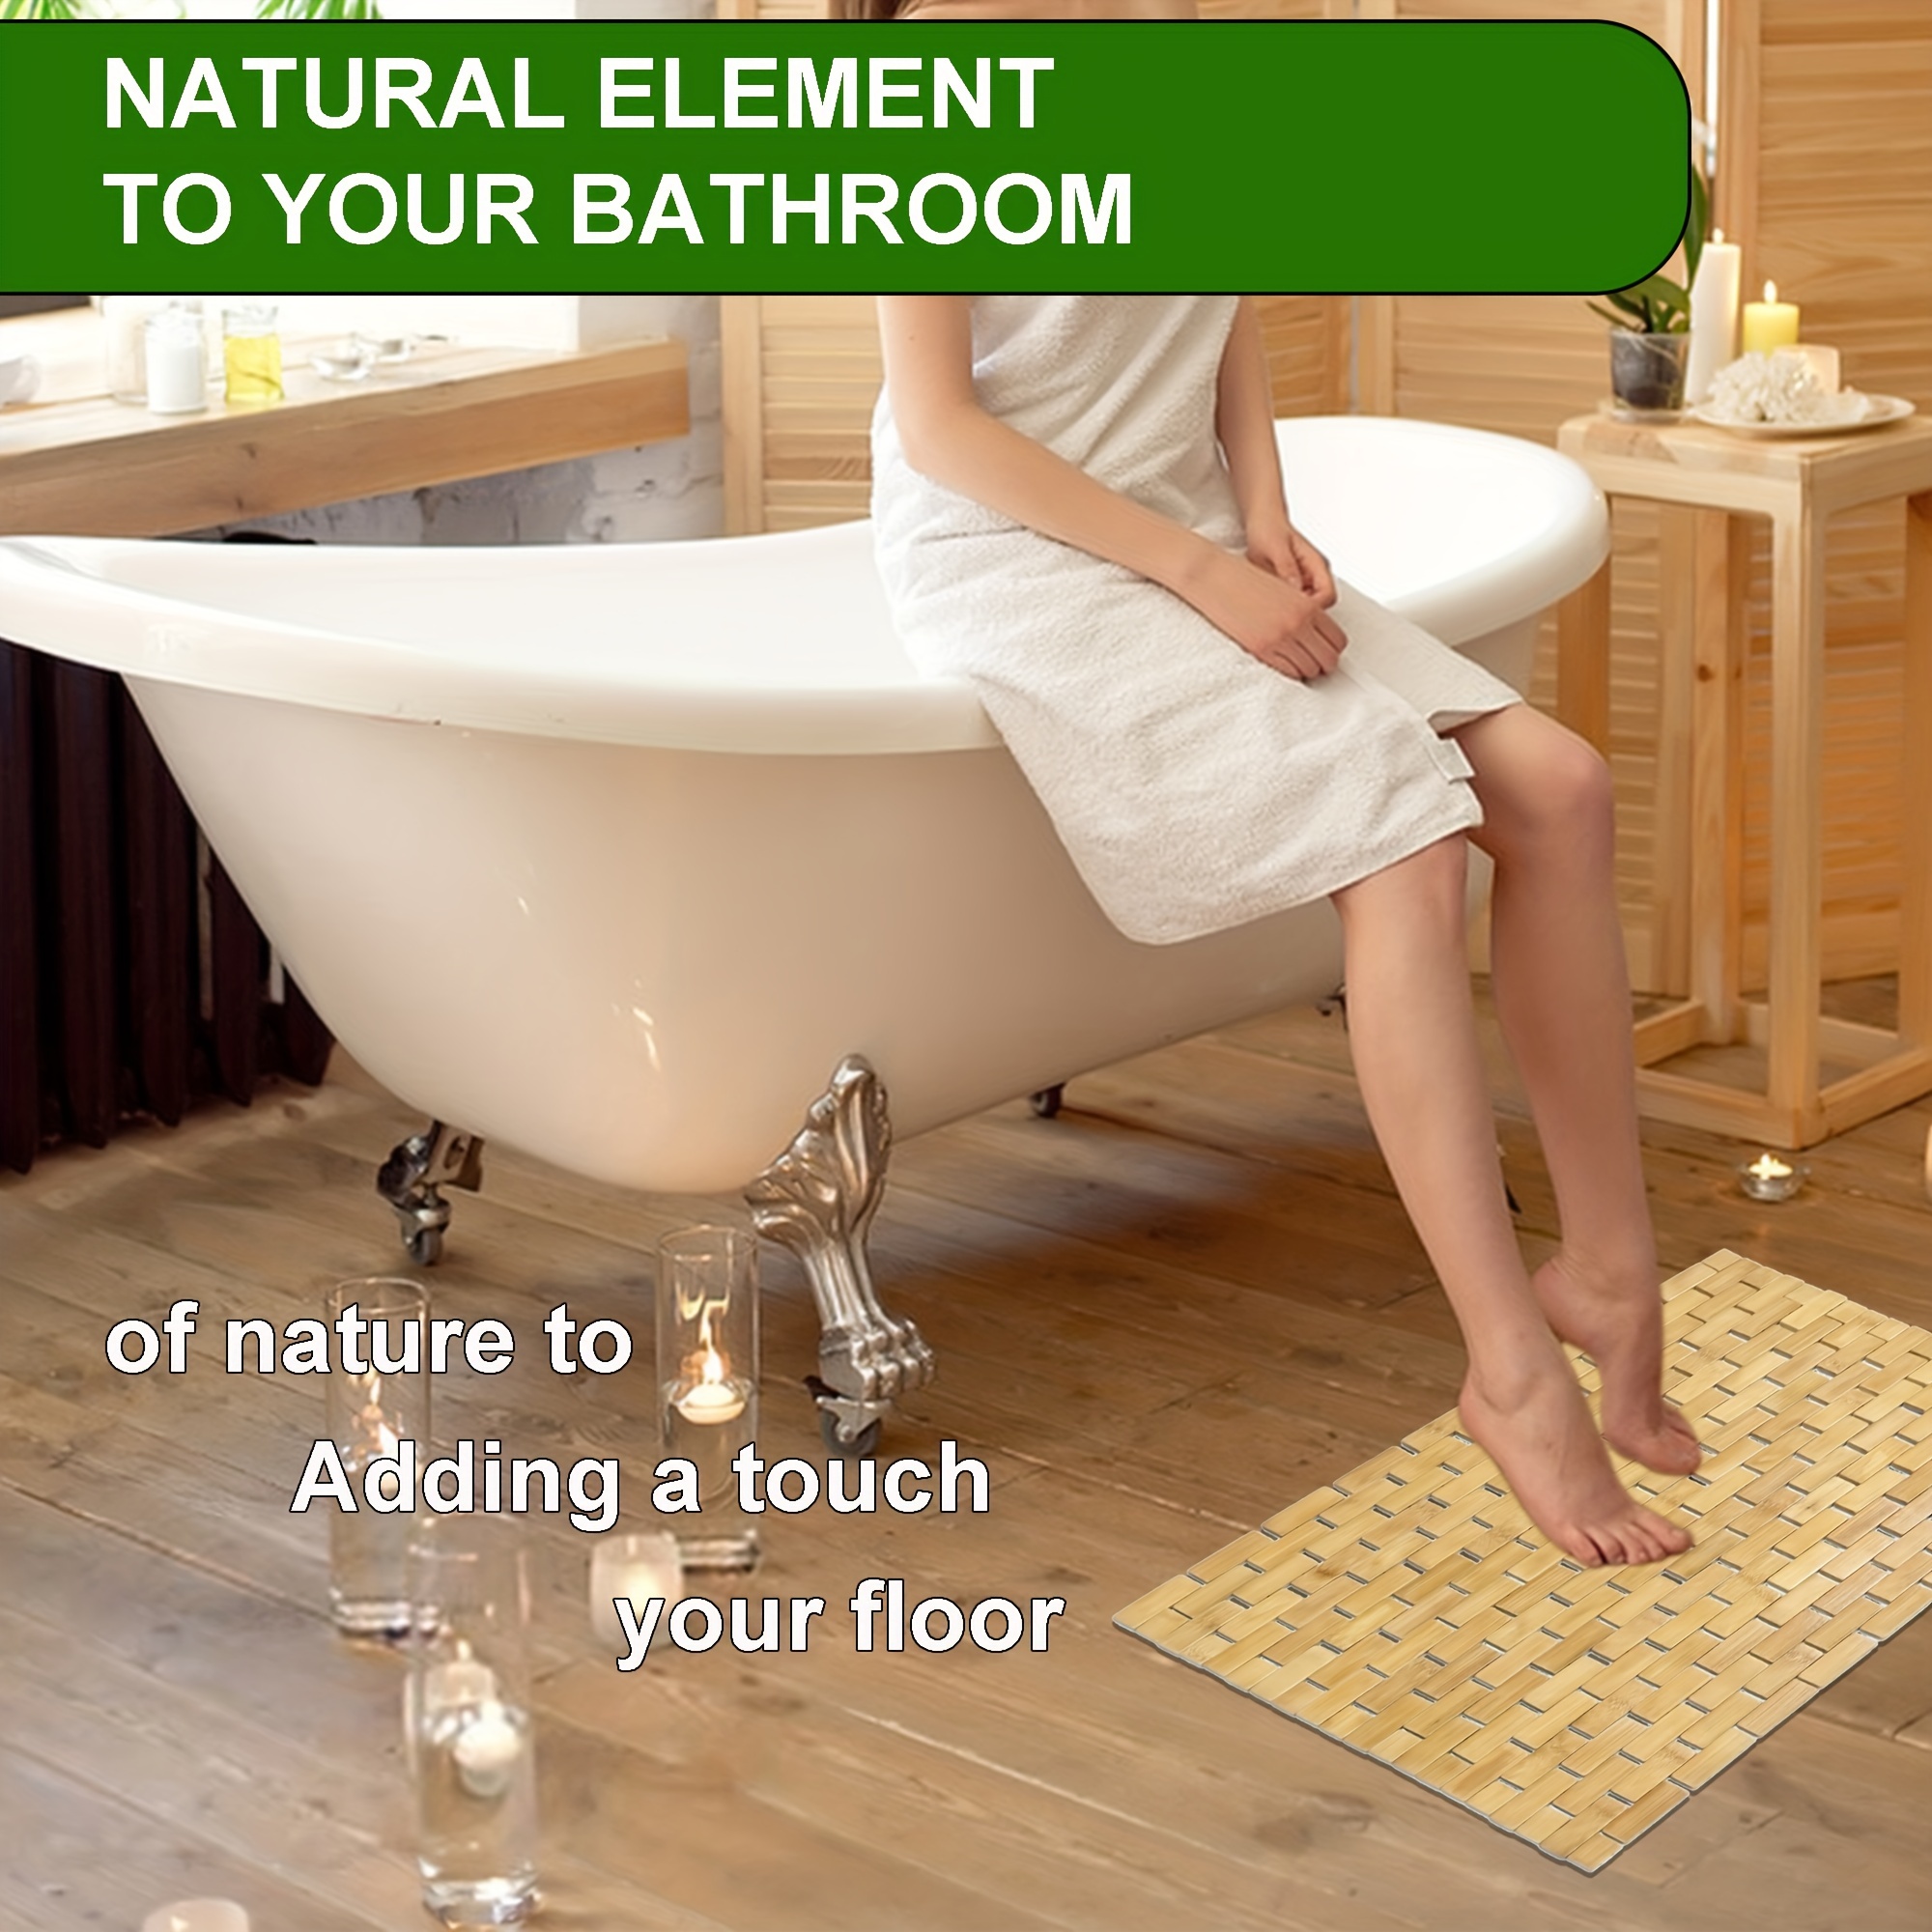 Teak Wood Bath Mat, Wooden Shower Mat for Bathroom, 24 X 16 Inch Non Slip  Wood F